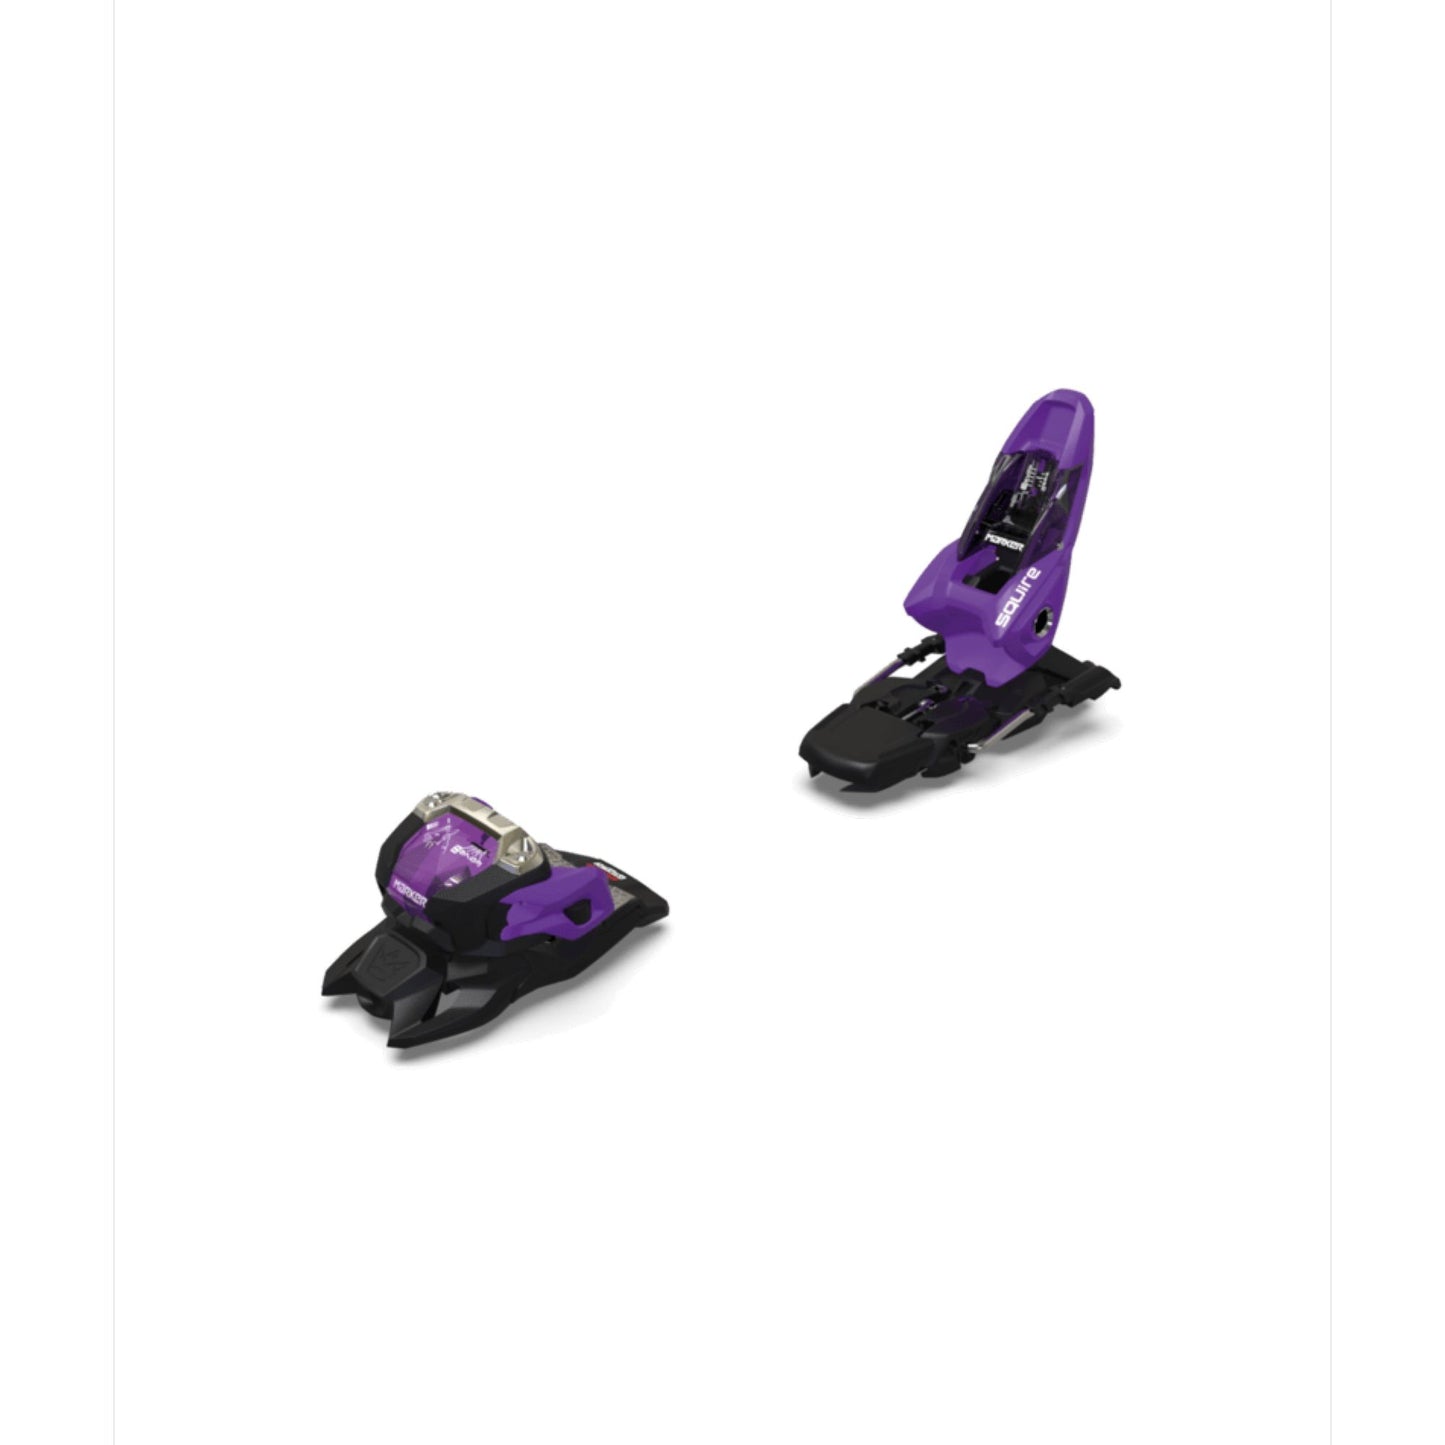 Marker Squire 11 Ski Bindings Black/Purple Ski Bindings